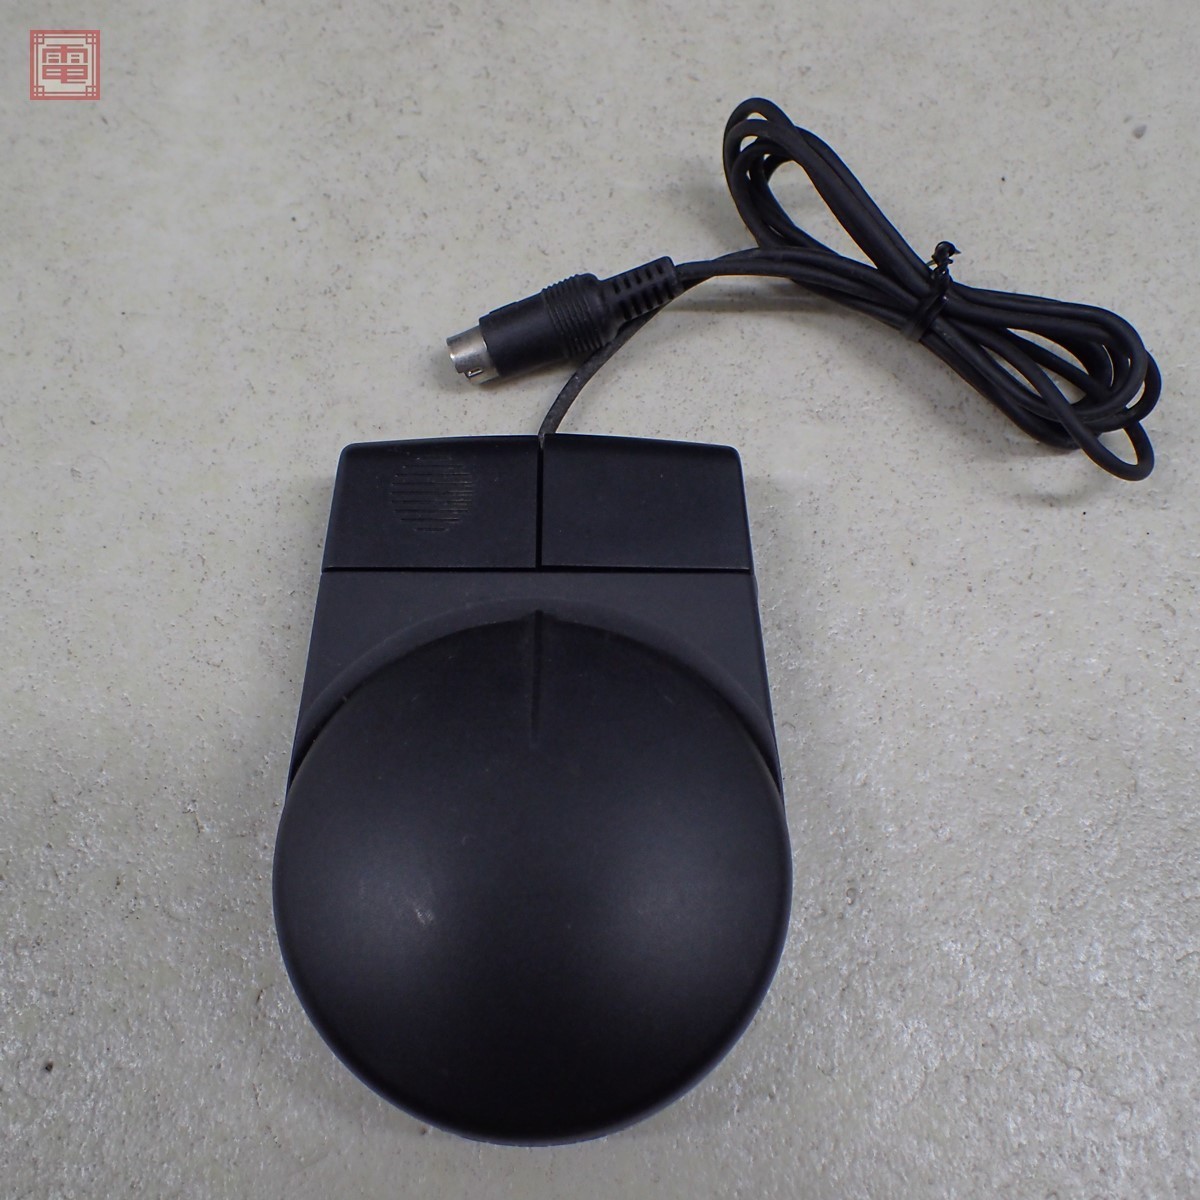 SHARP X68000 マウス KI-OM0002CE02 シャープ ジャンク パーツ取りにどうぞ【10_画像1